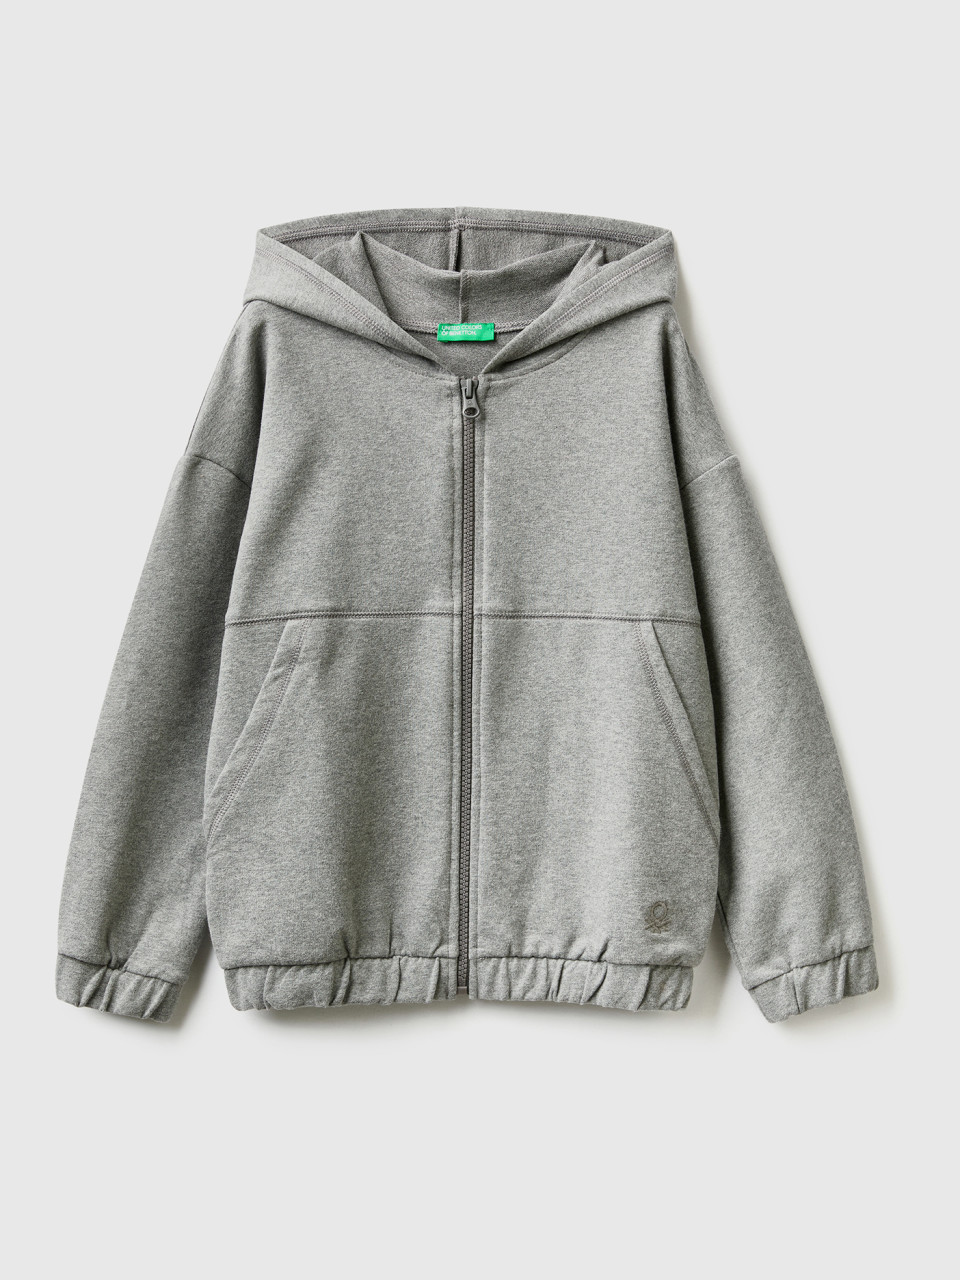 Benetton, Warm Sweatshirt With Zip And Embroidered Logo, Dark Gray, Kids